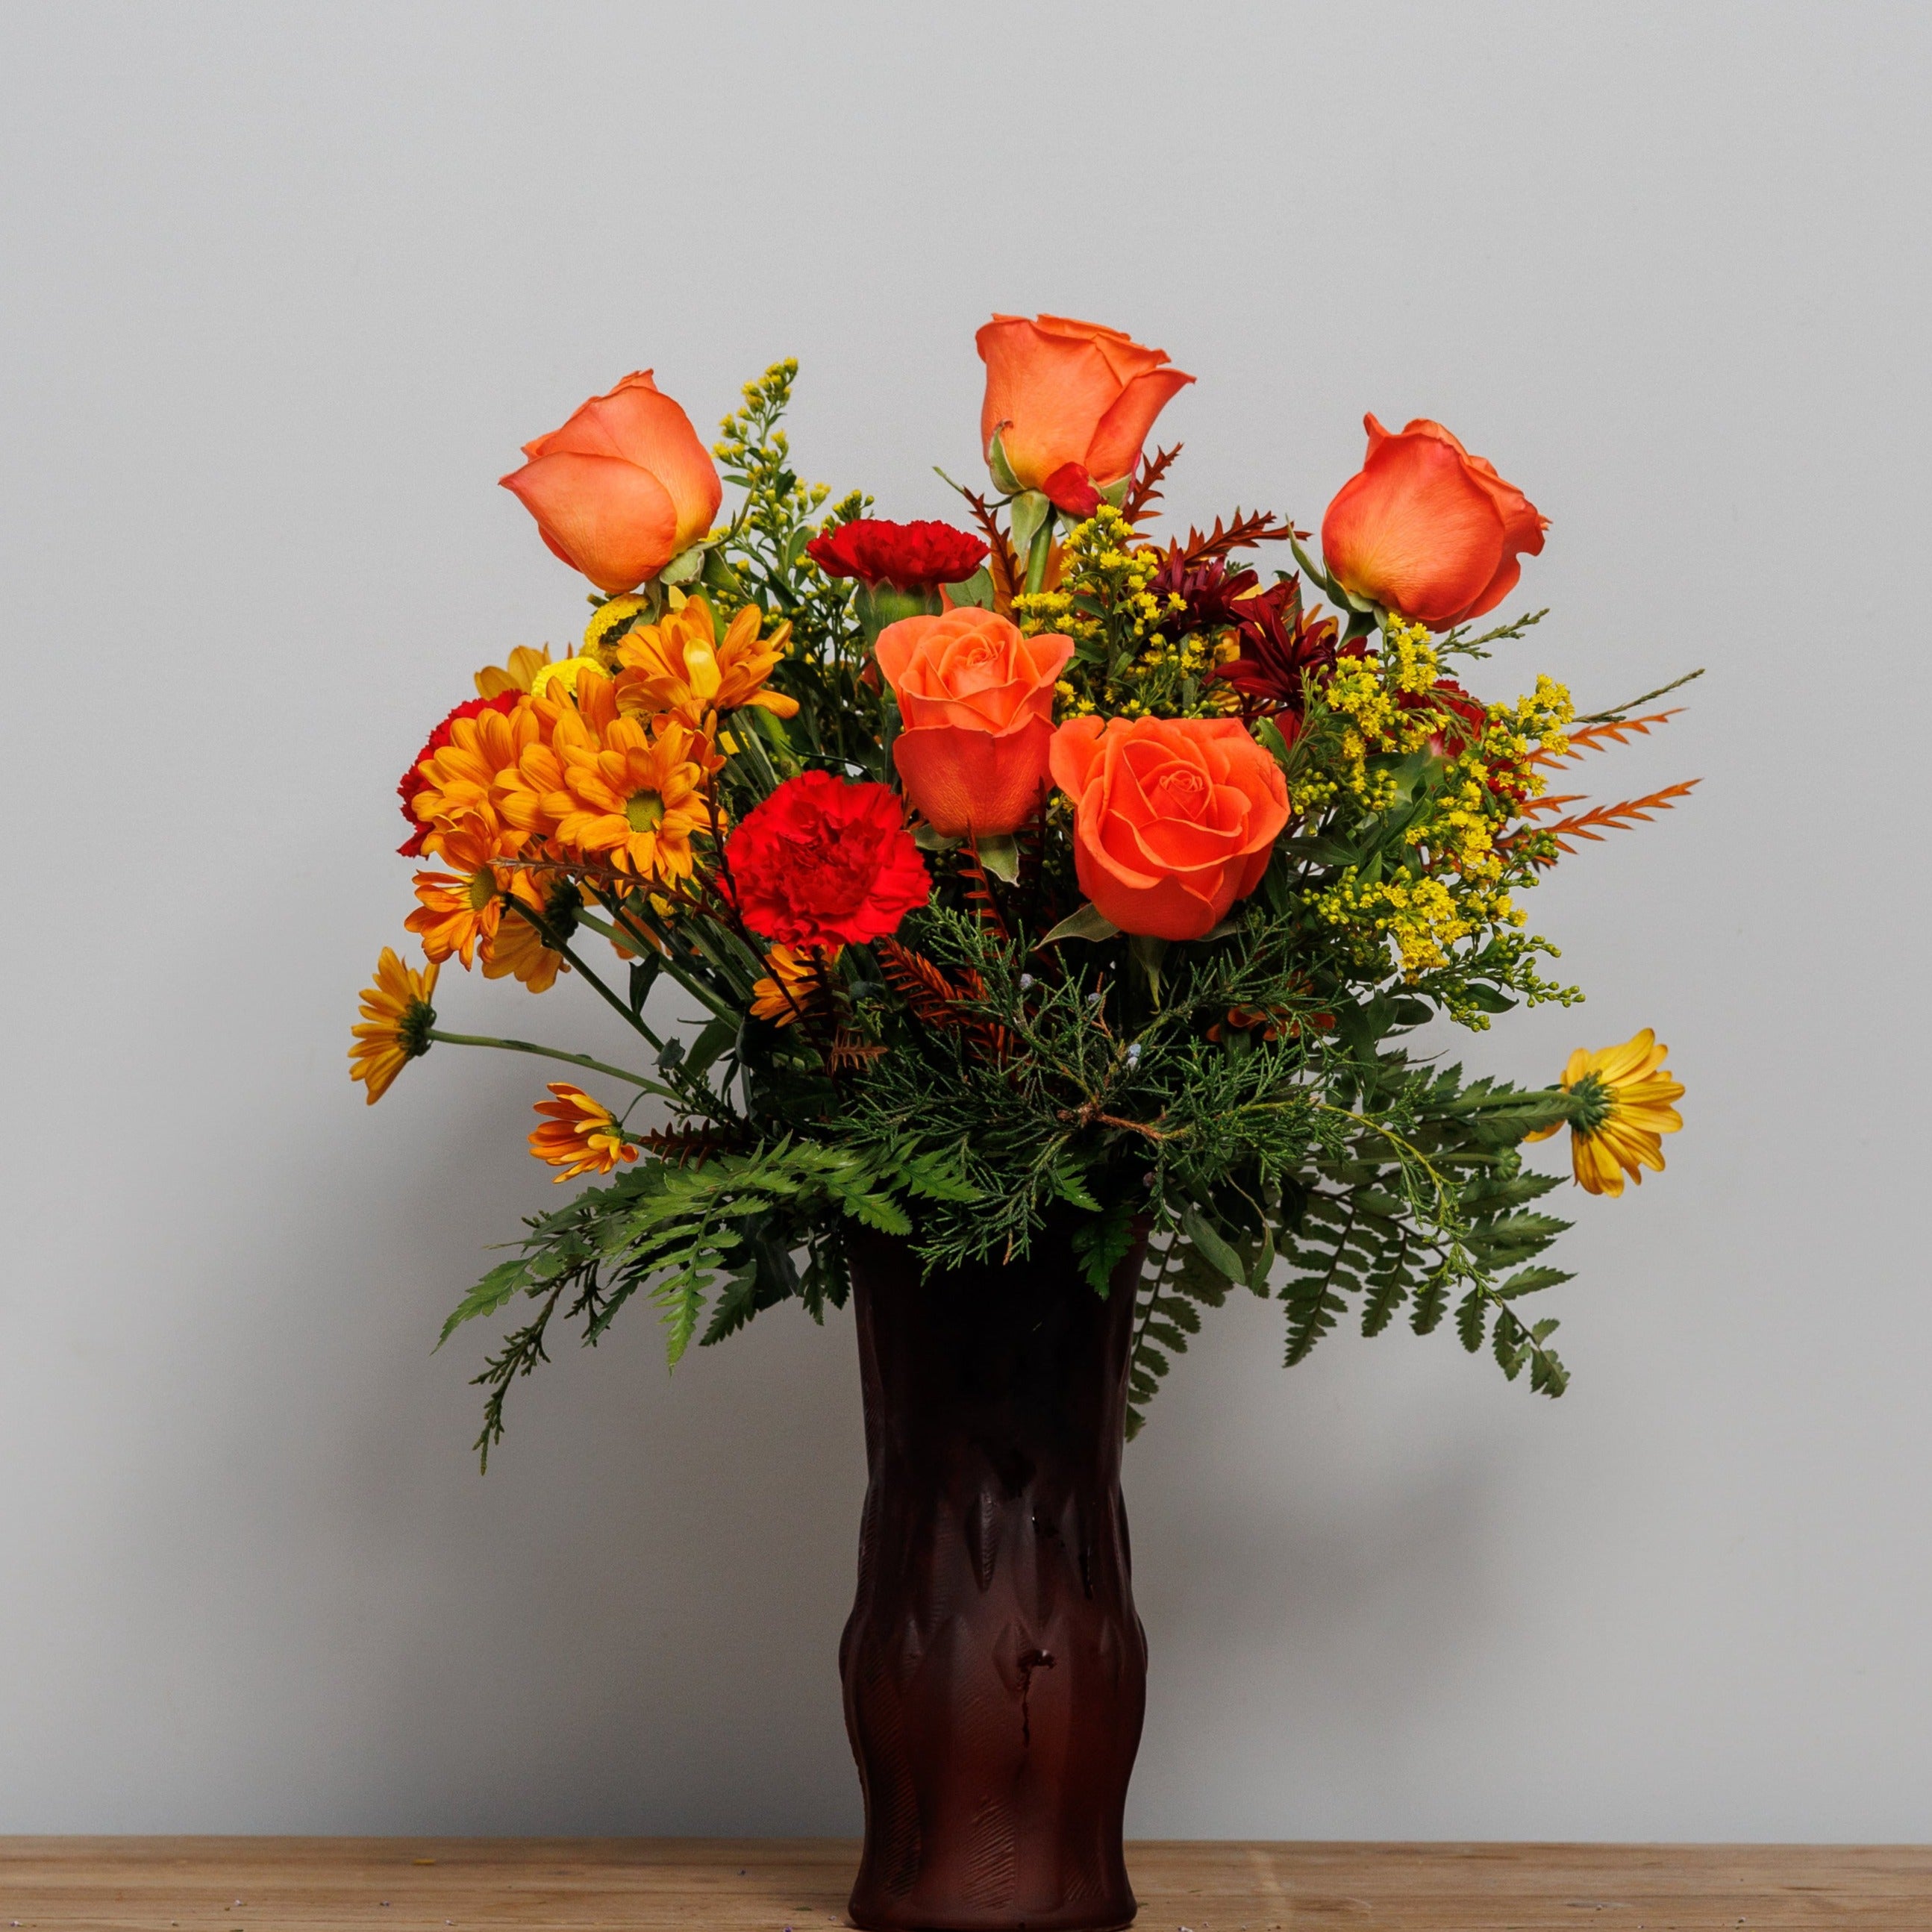 Orange roses with daisies and solidago.